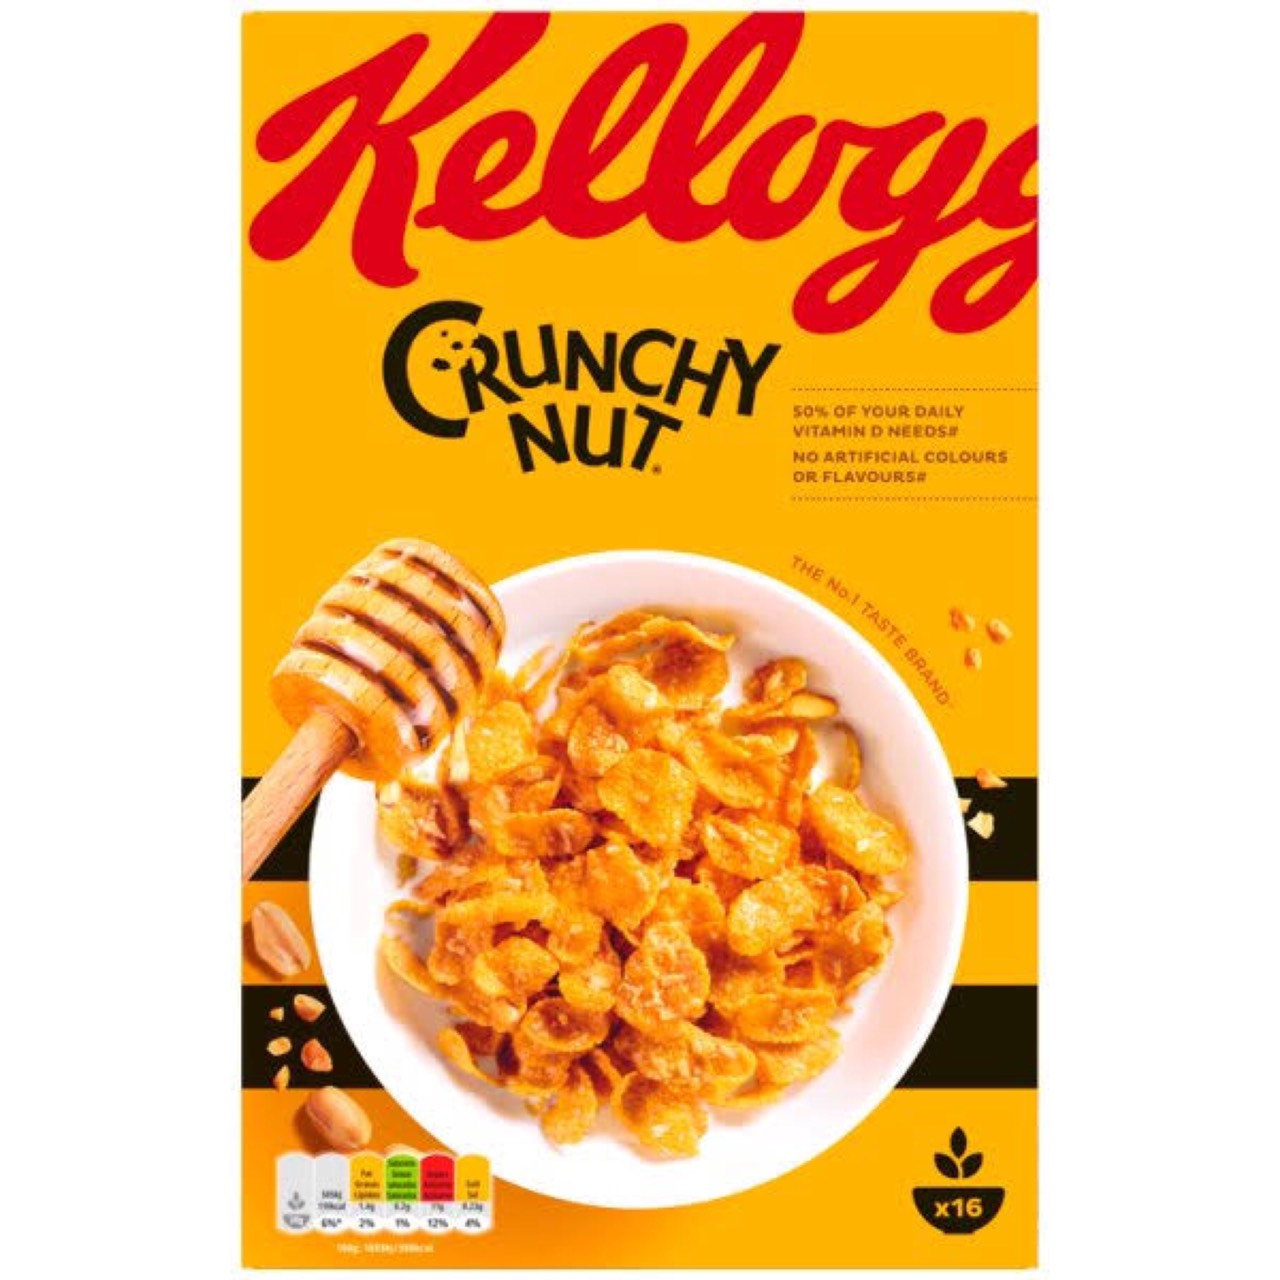 Kellogg’s Crunchy Nut - ซีเรียล เคลล็อกส์ ครันชี่ นัท (500g)